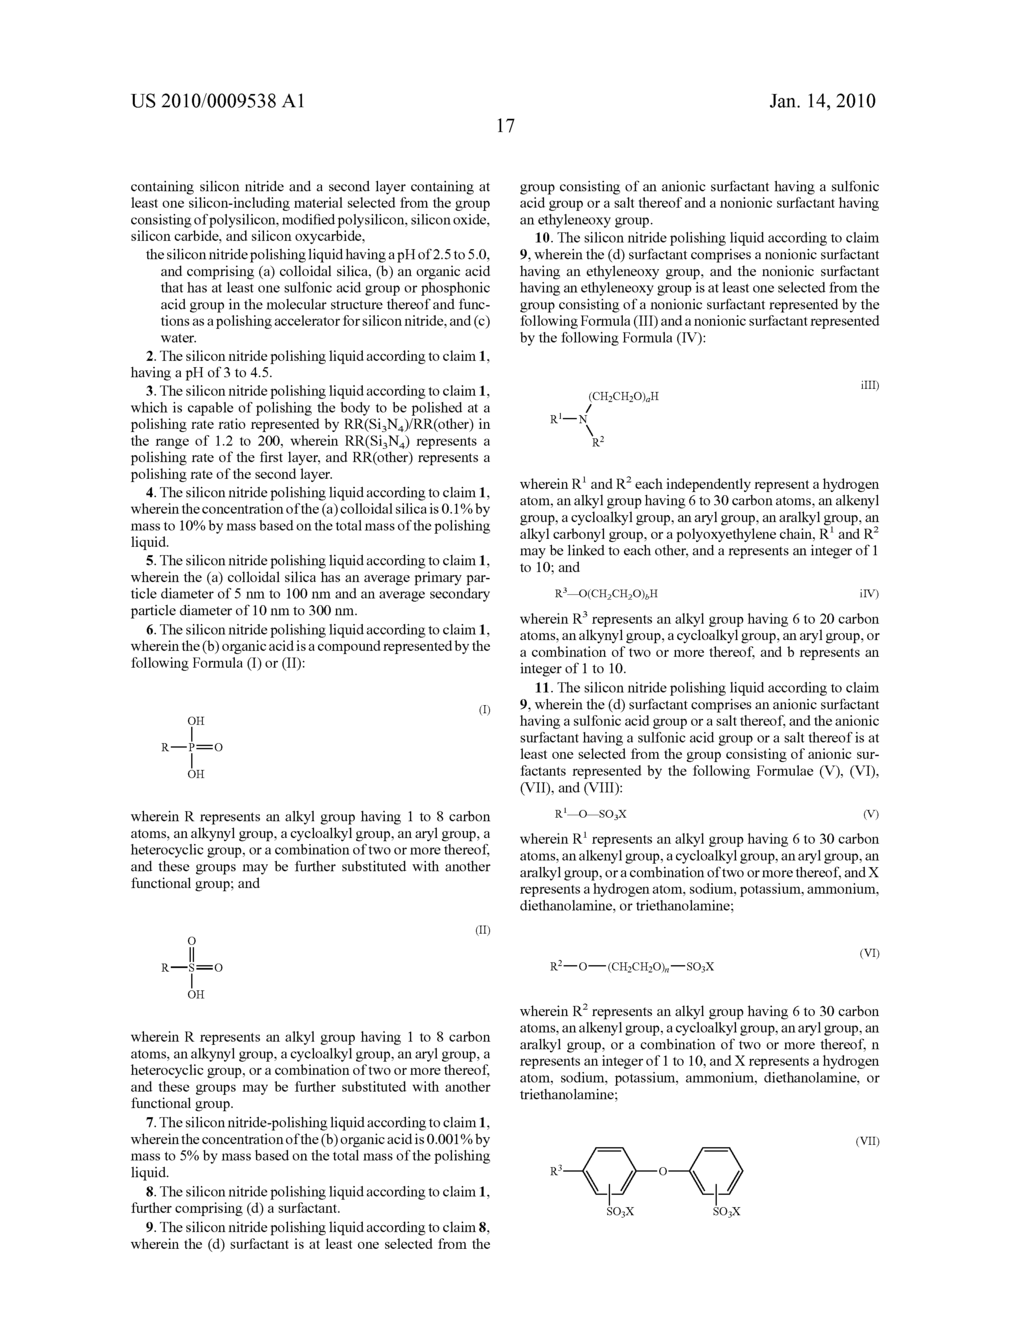 Silicon nitride polishing liquid and polishing method - diagram, schematic, and image 18